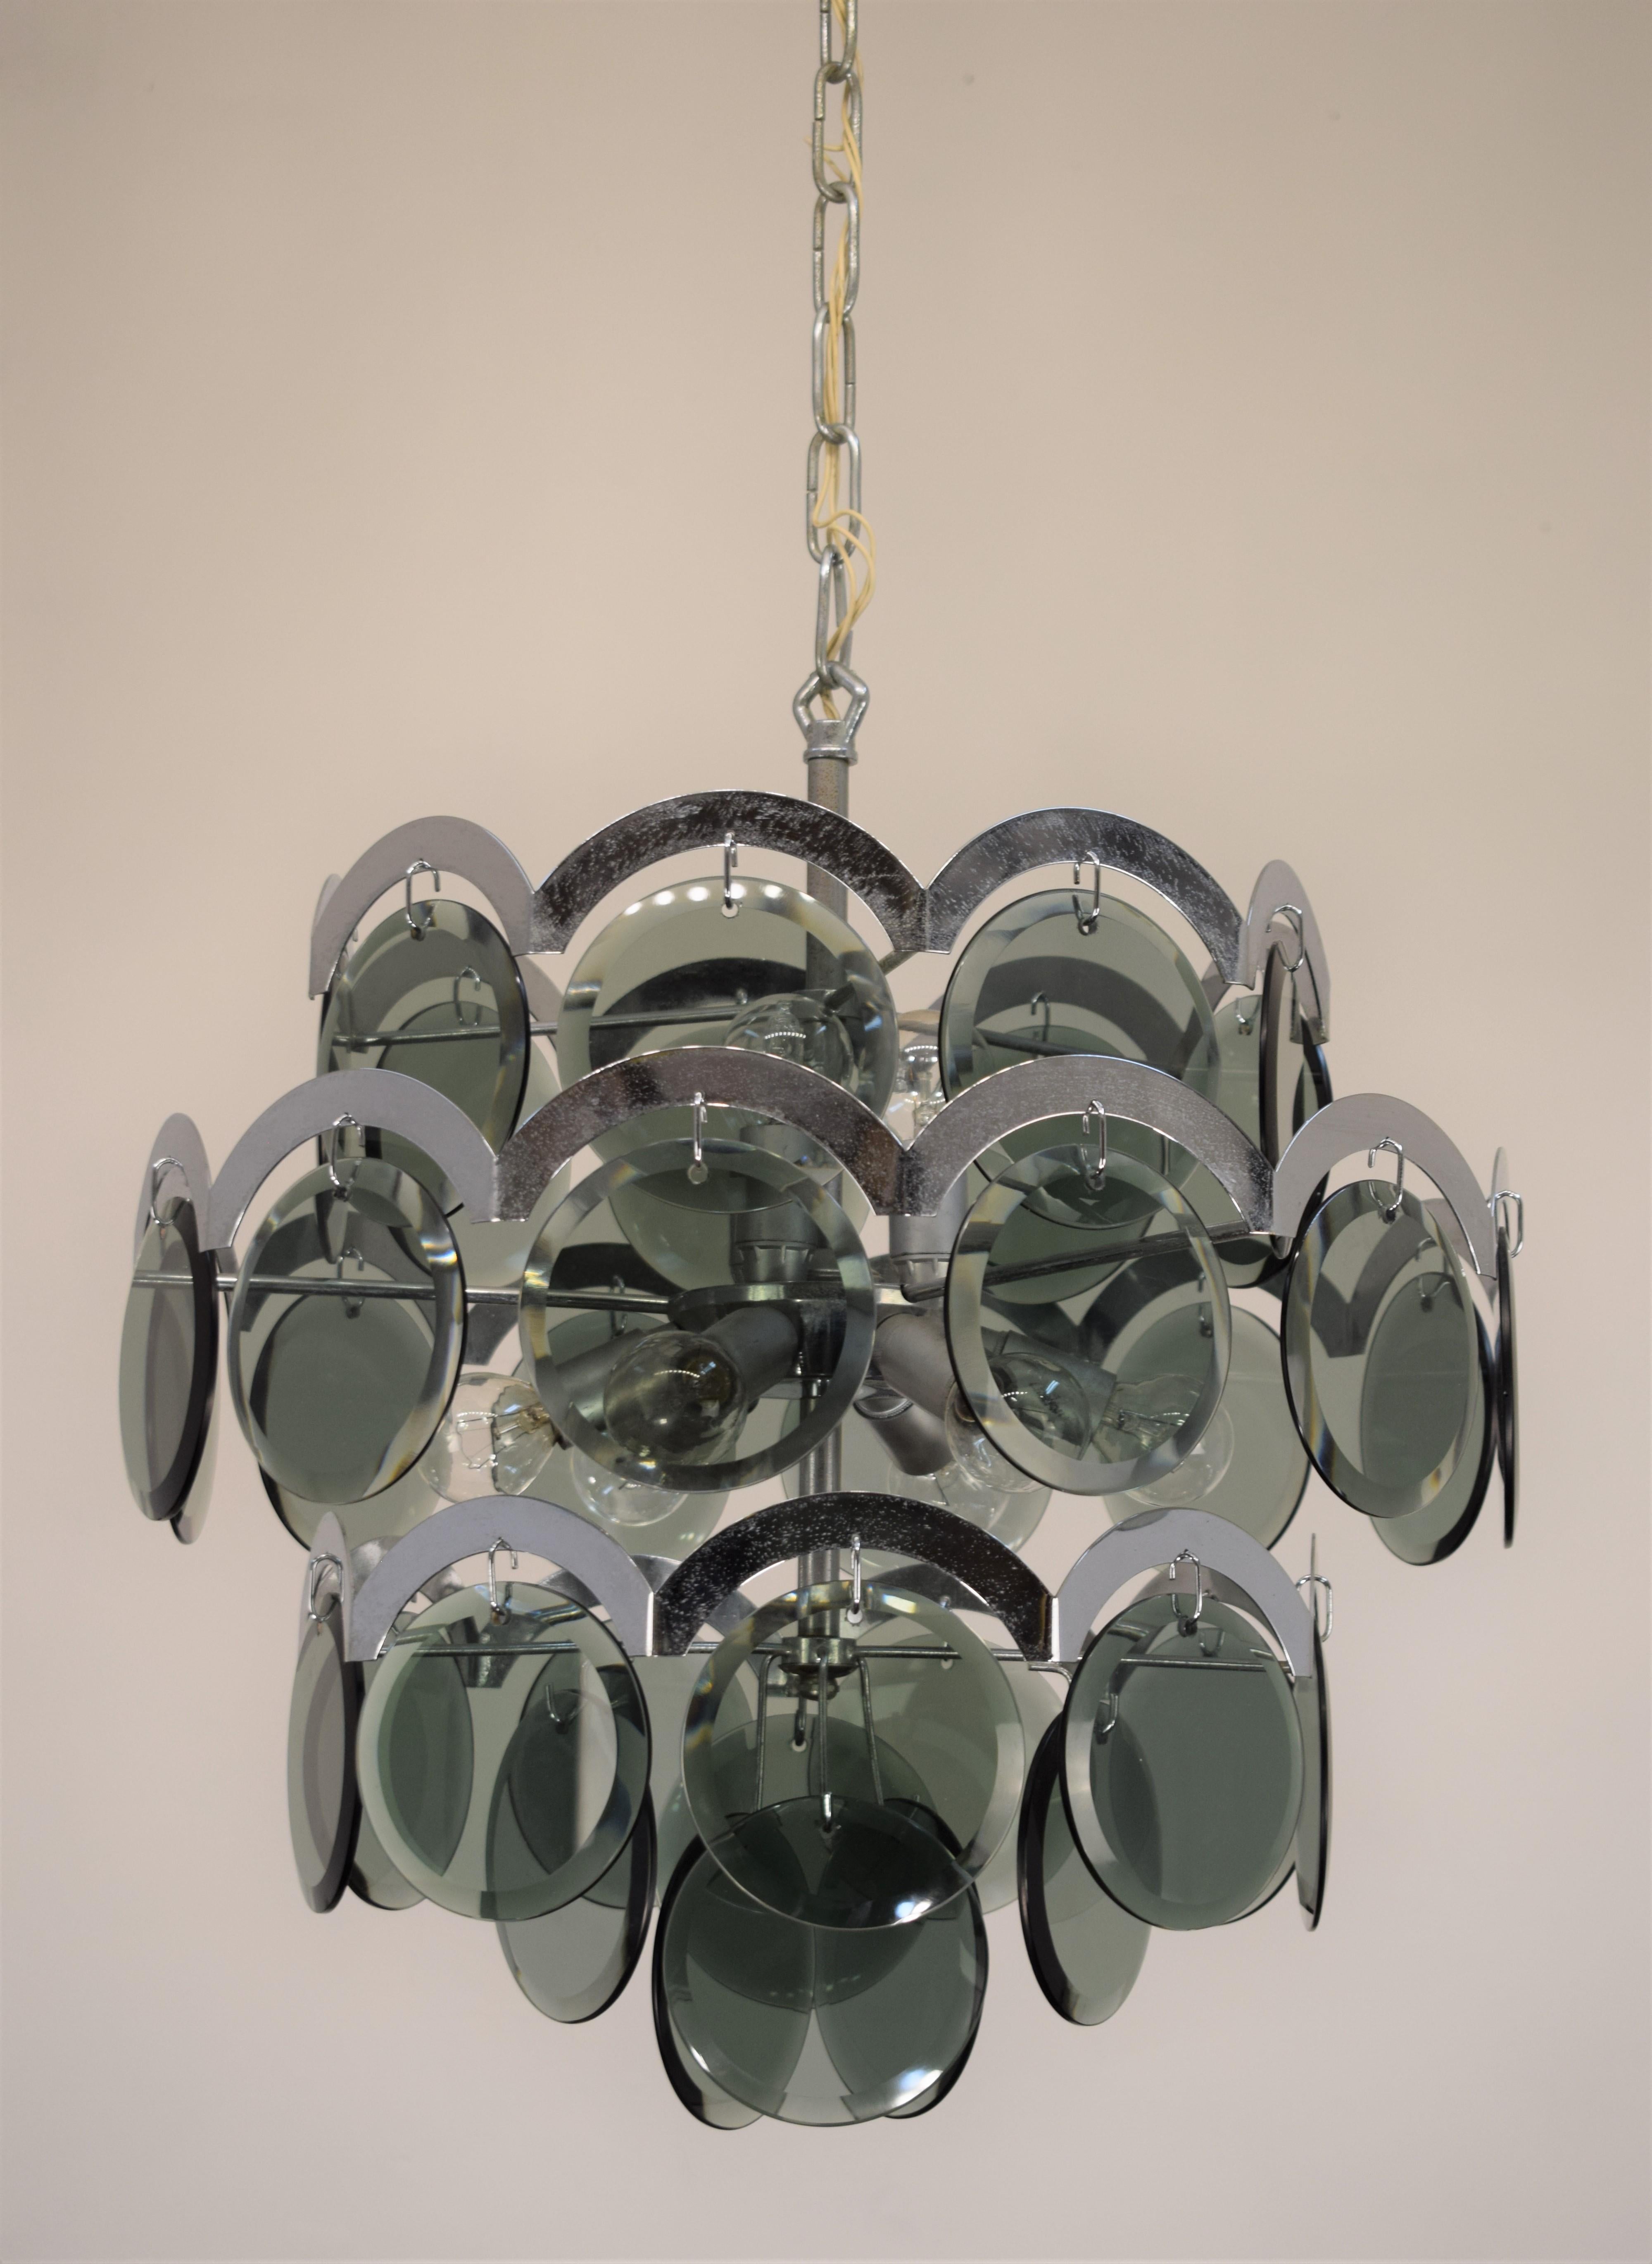 Italian chandelier by Gino Vistosi, 1960s.

DImensions: H= 100 cm; D= 48 cm.